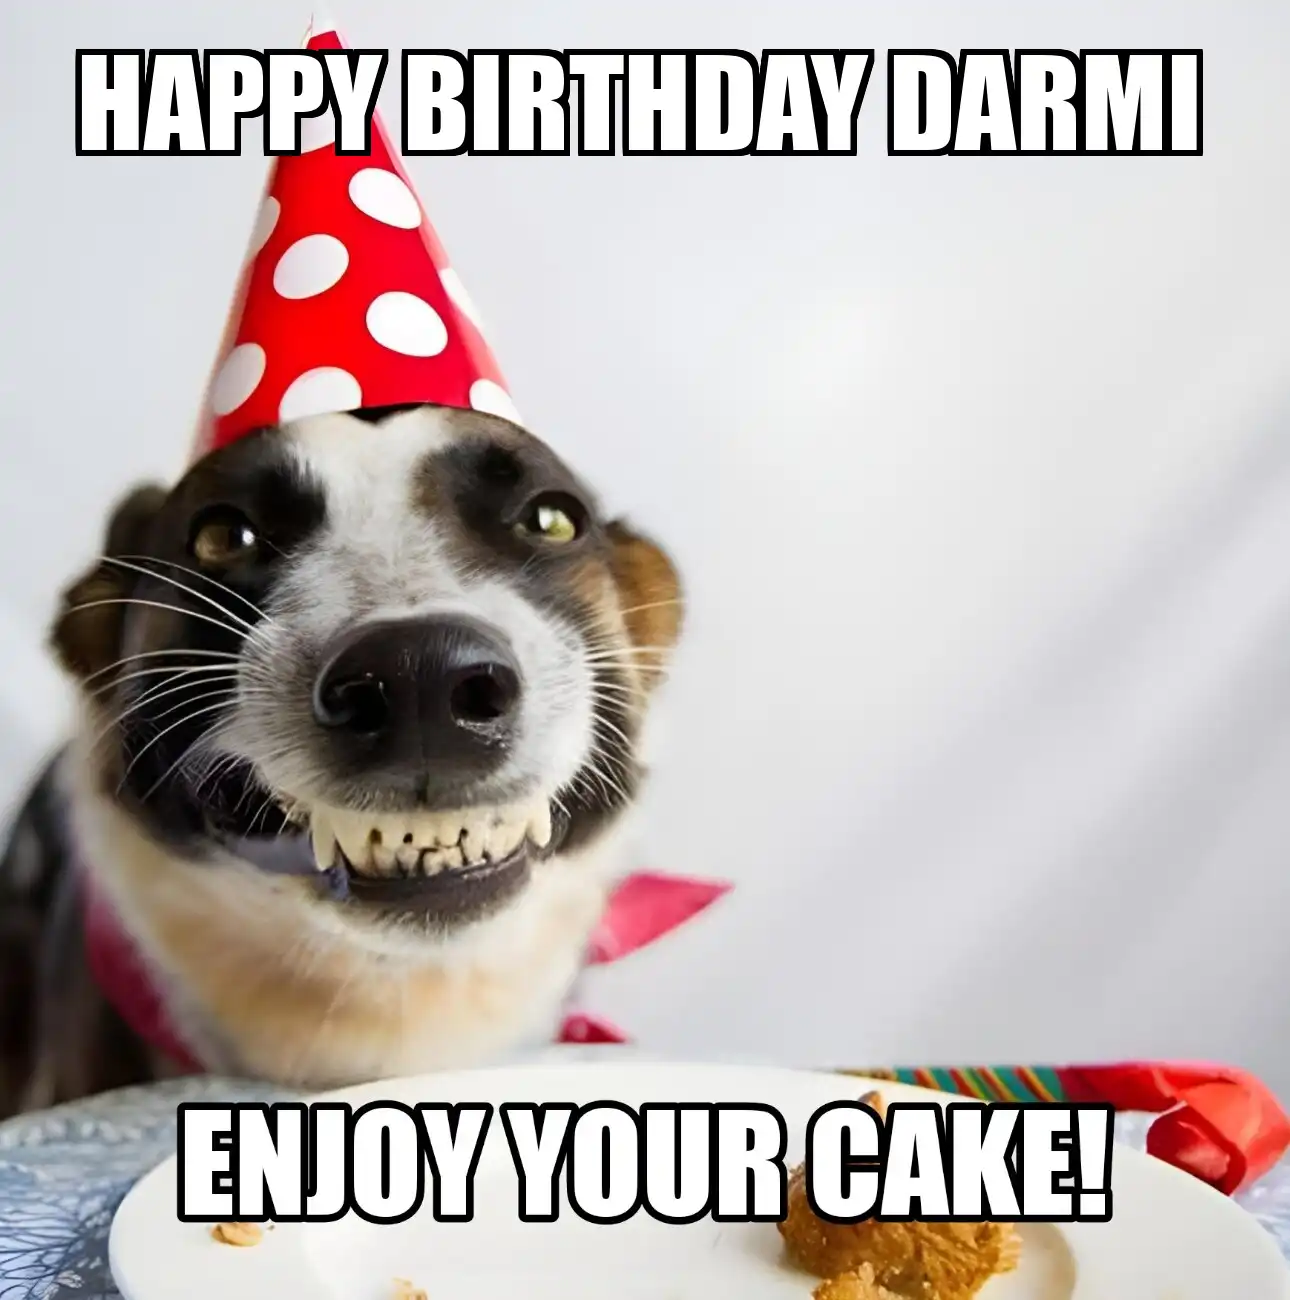 Happy Birthday Darmi Enjoy Your Cake Dog Meme